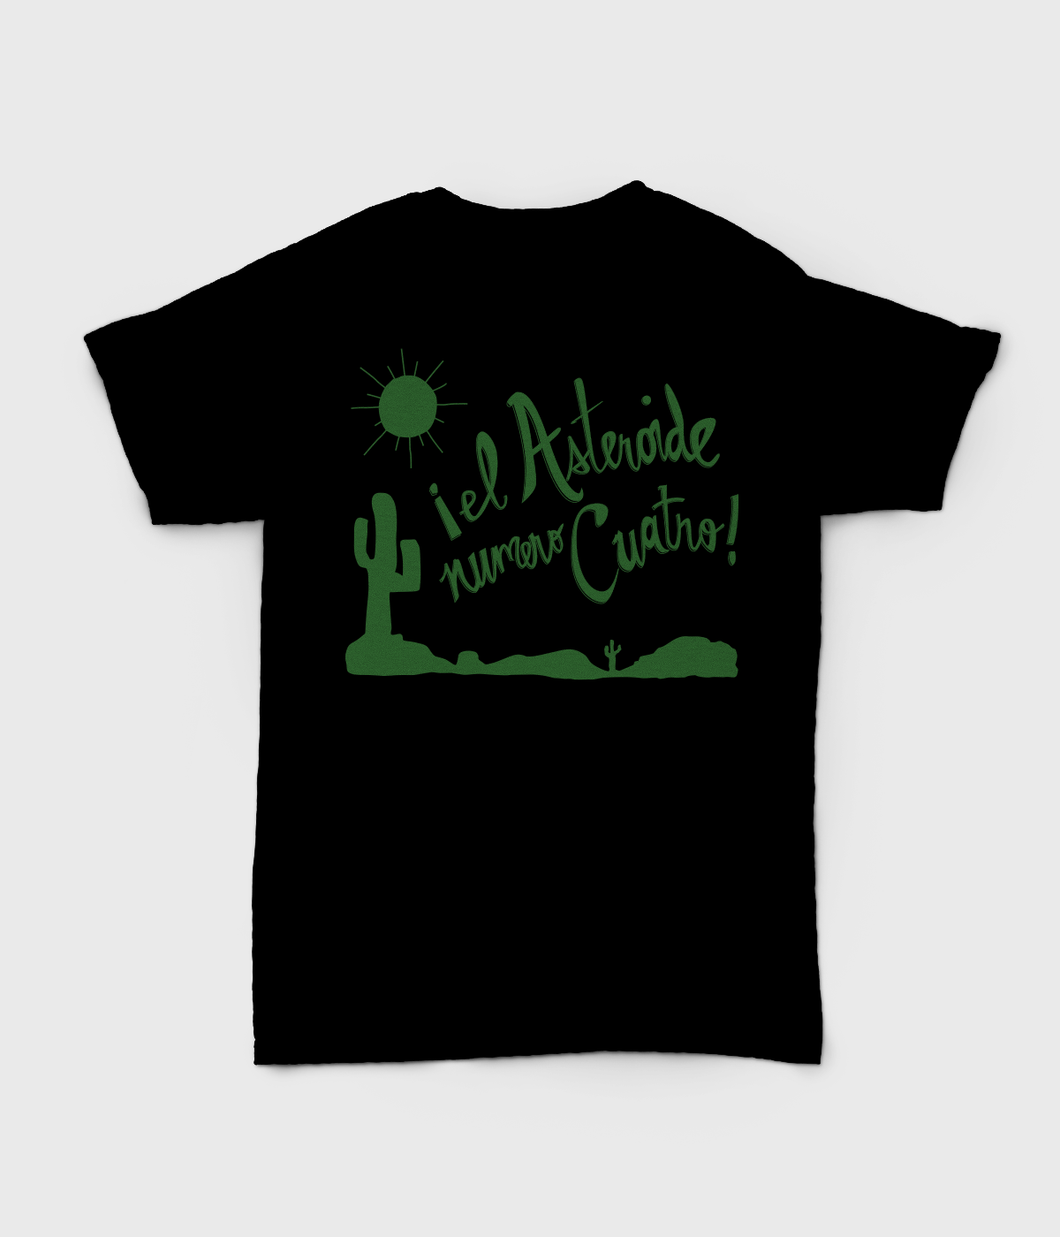 El Asteroide Numero Quatro T-shirts - Black with Green